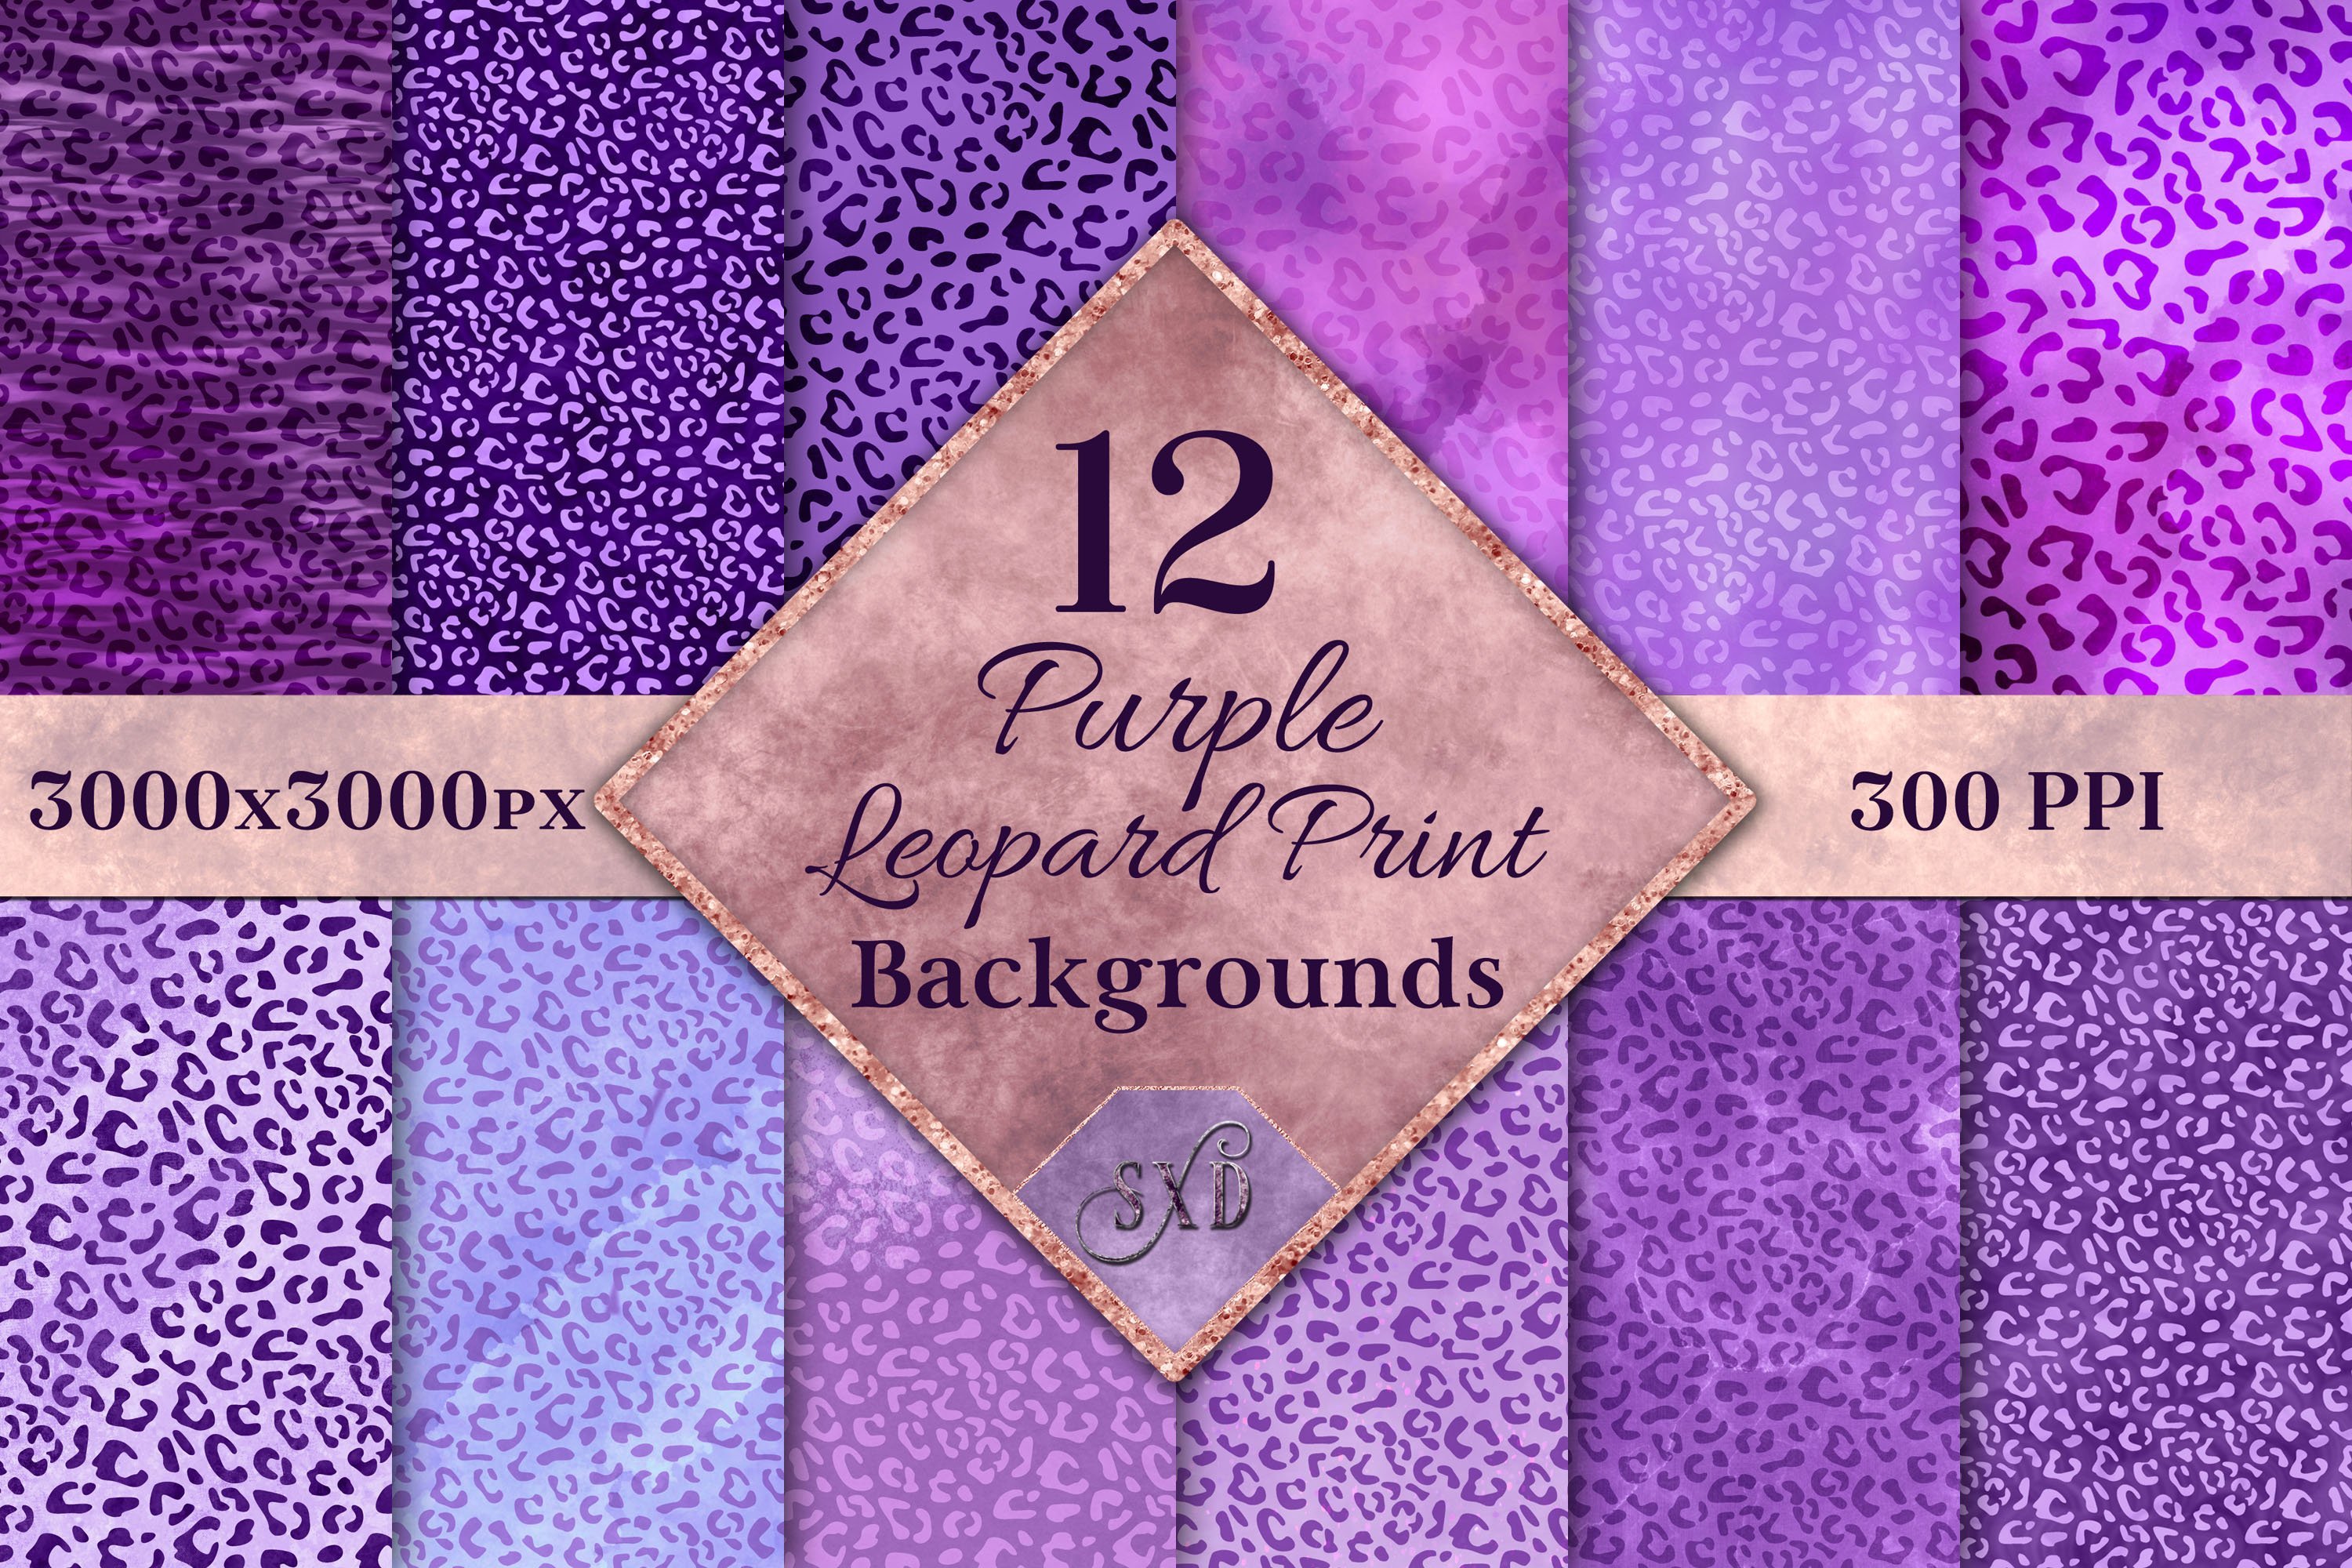 Purple Leopard Print Backgrounds cover image.